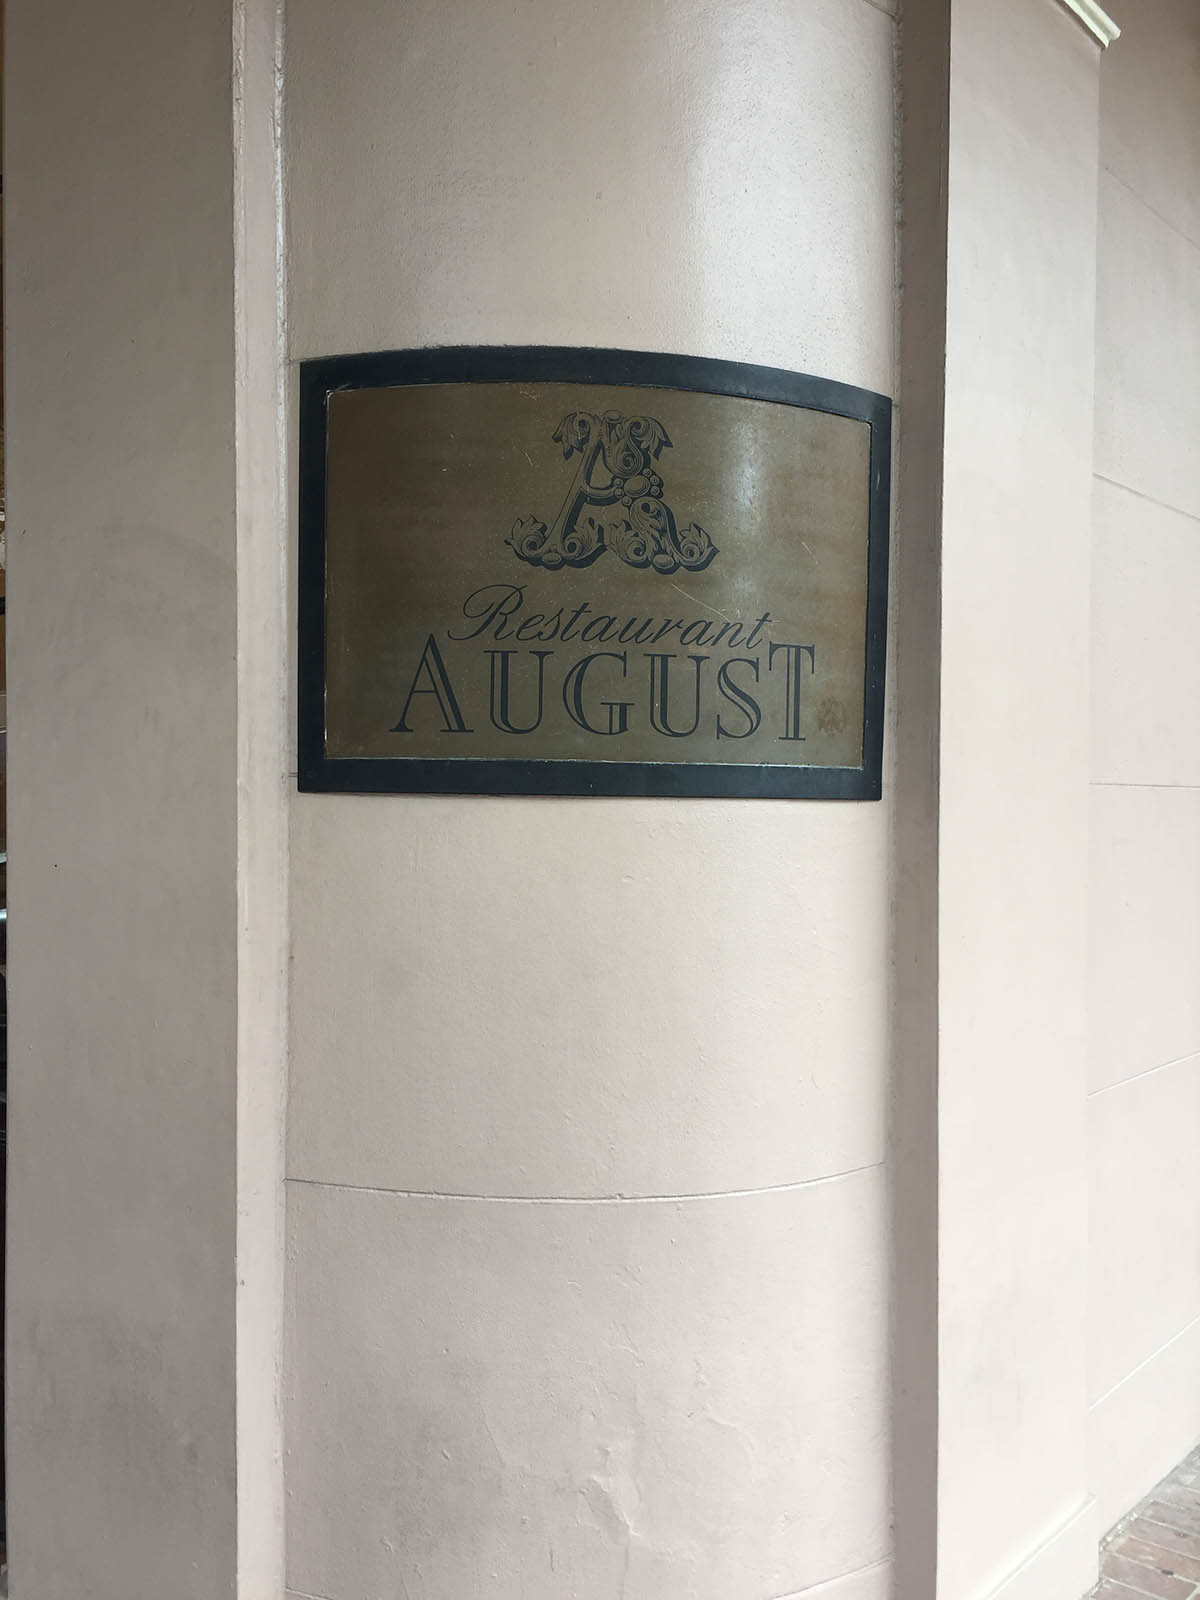 August Restaurant in New Orleans, LA